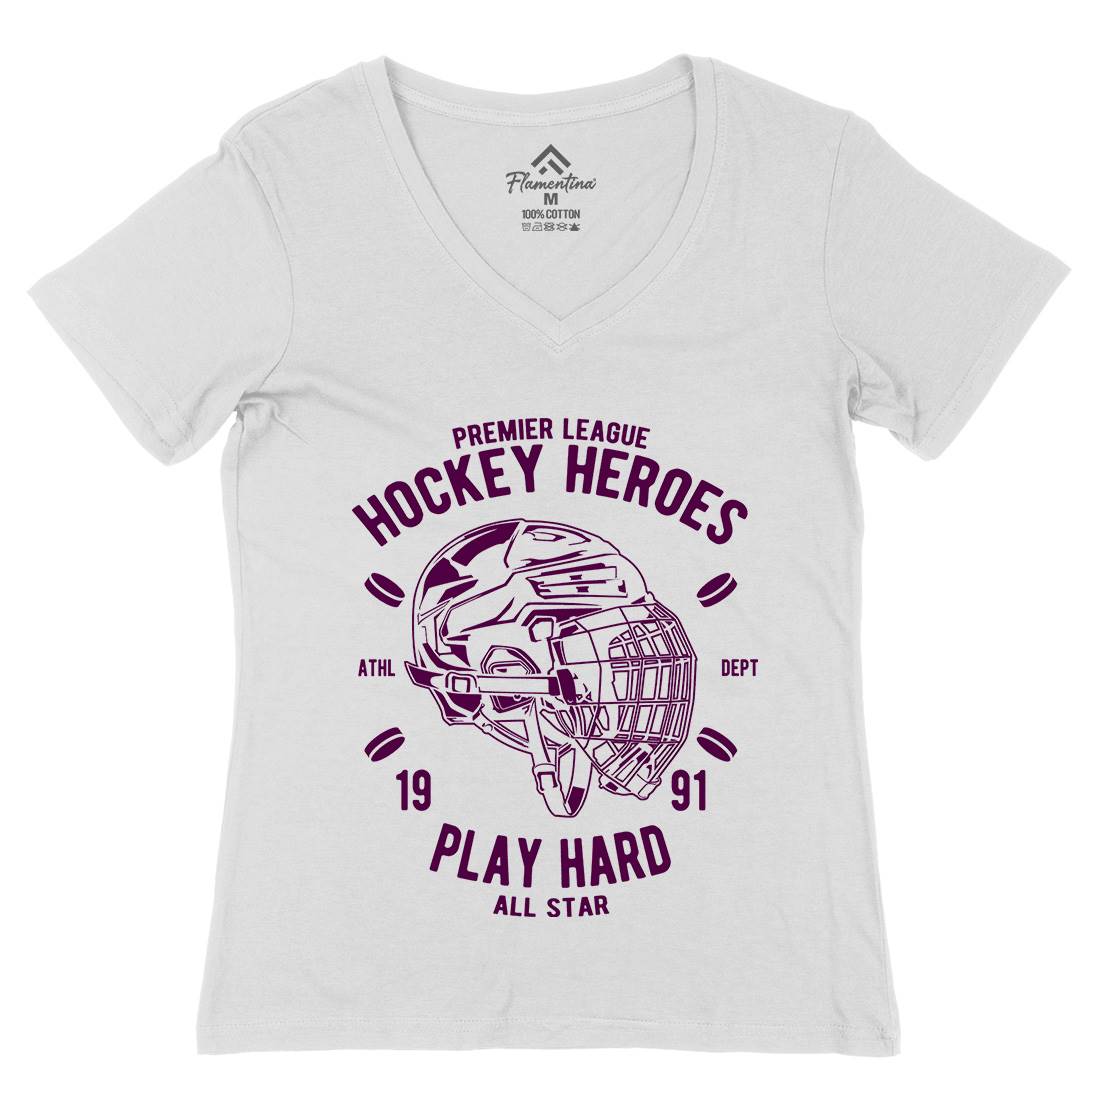 Hockey Heroes Womens Organic V-Neck T-Shirt Sport A064